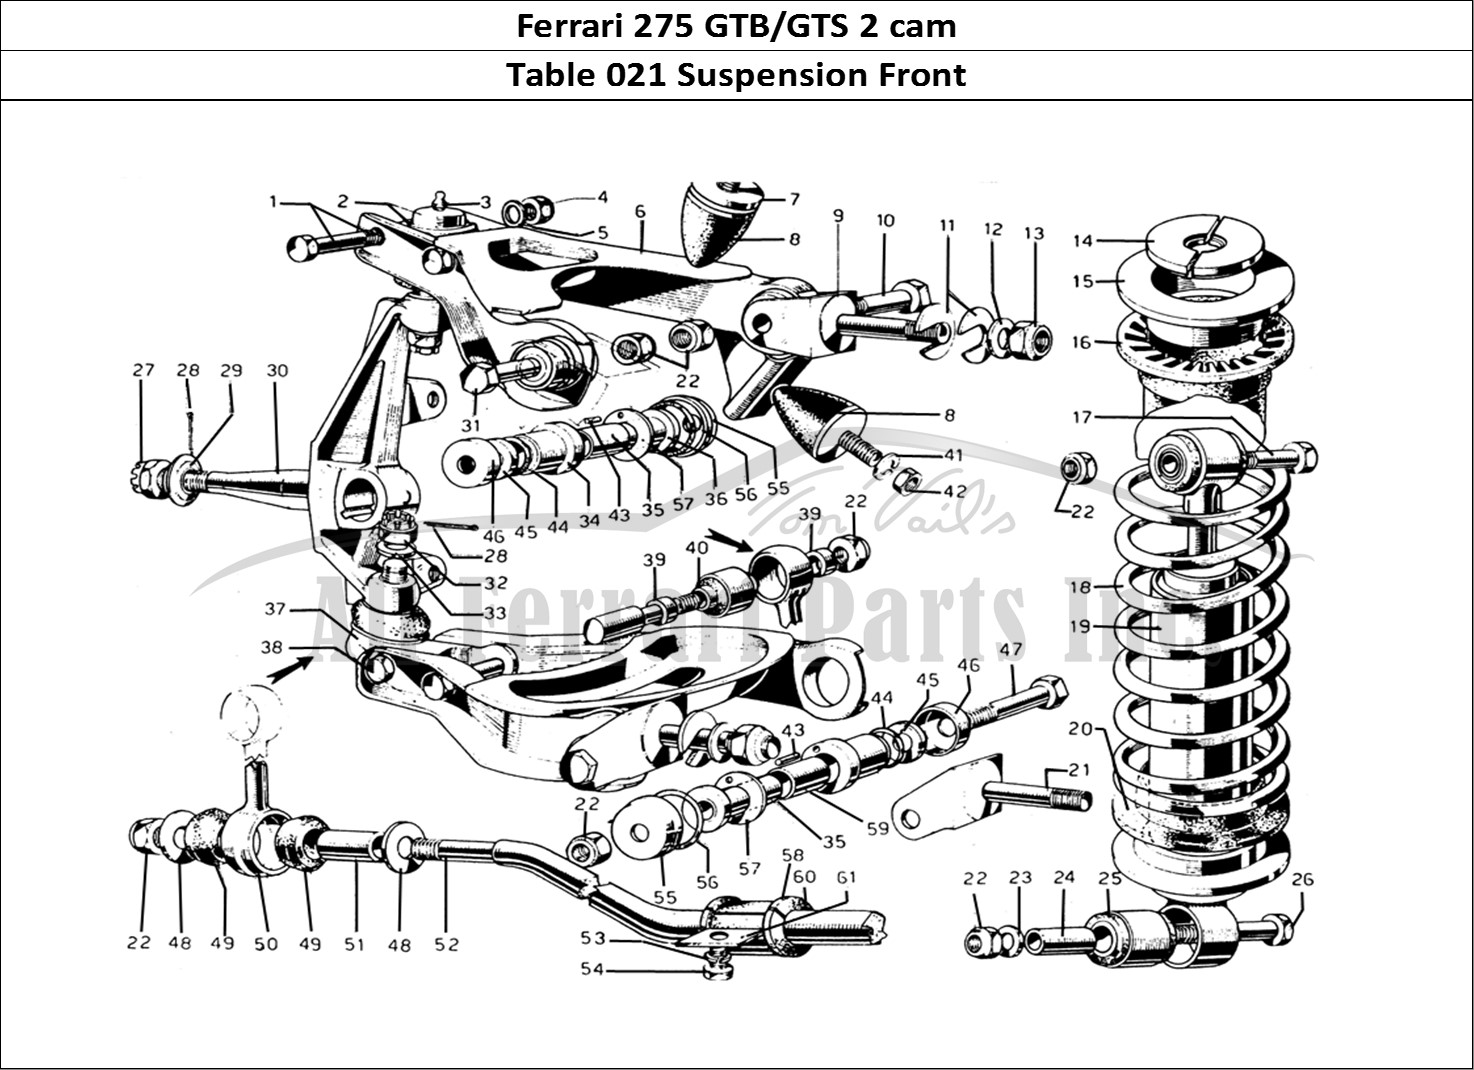 Ferrari Parts Ferrari 275 GTB/GTS 2 cam Page 021 Front Suspension